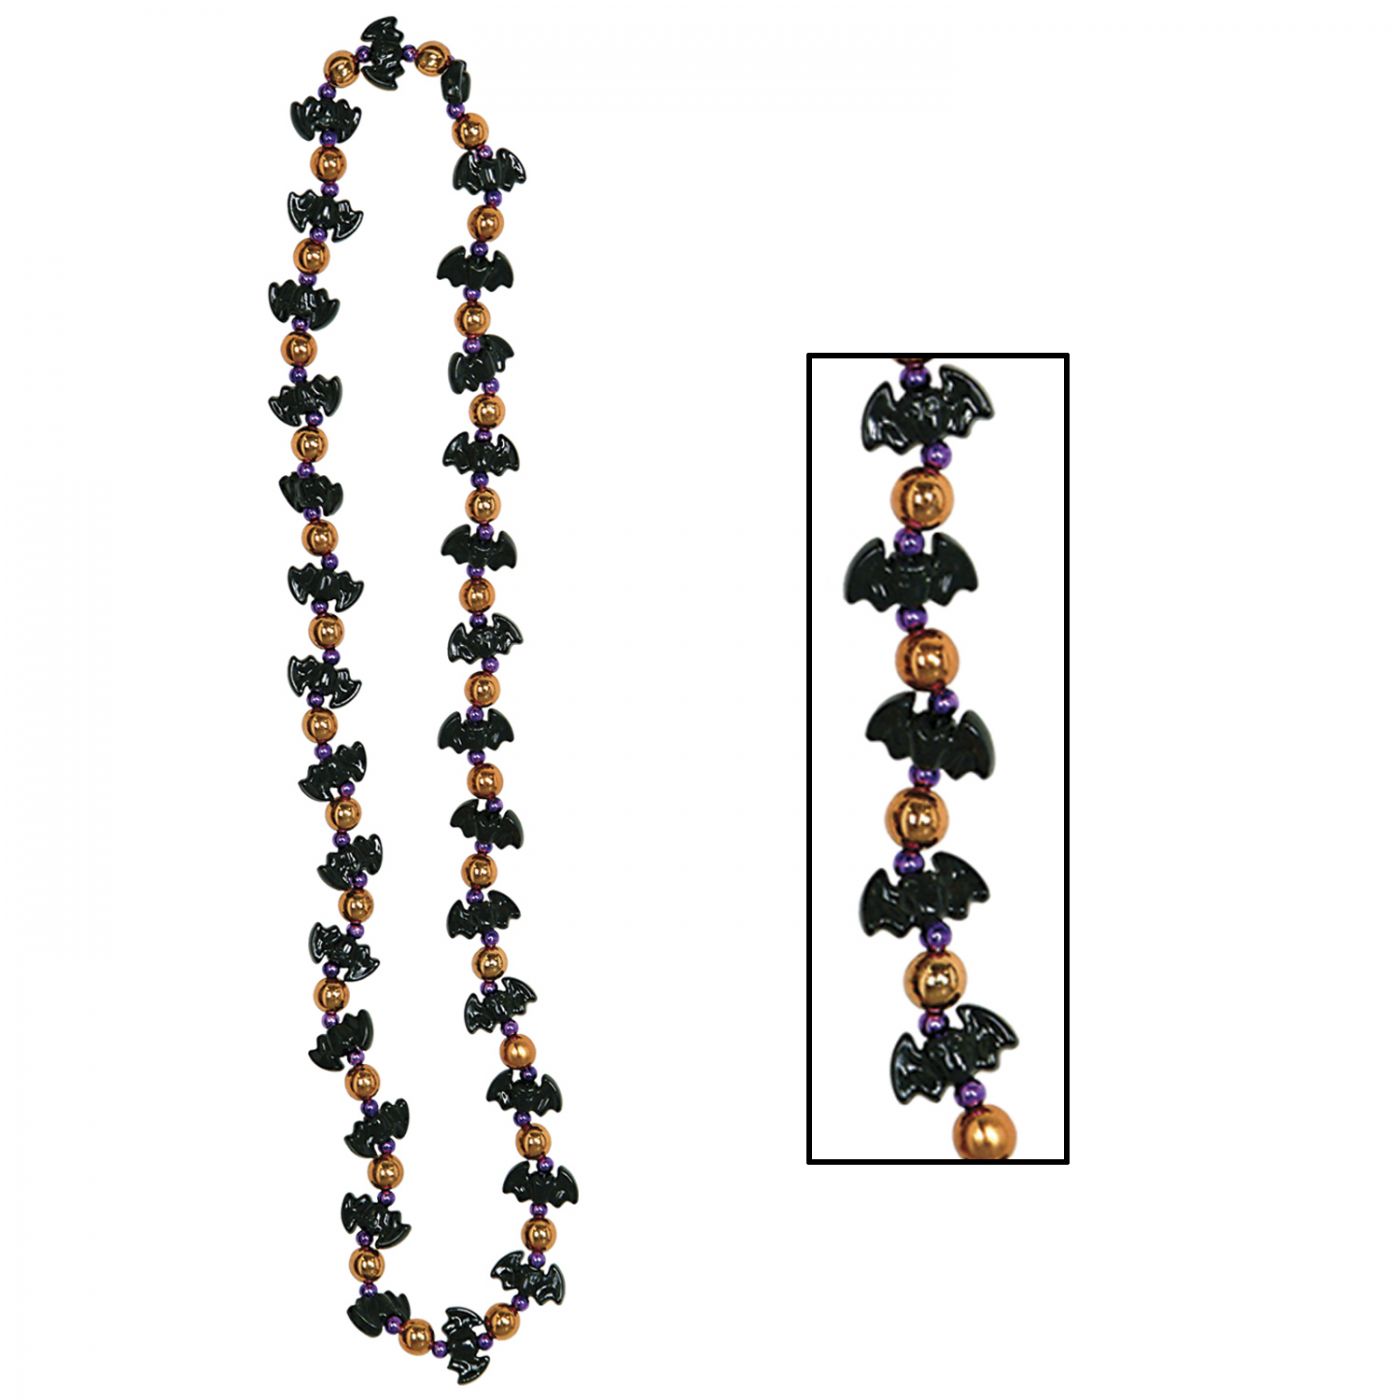 Bat Beads (12) image